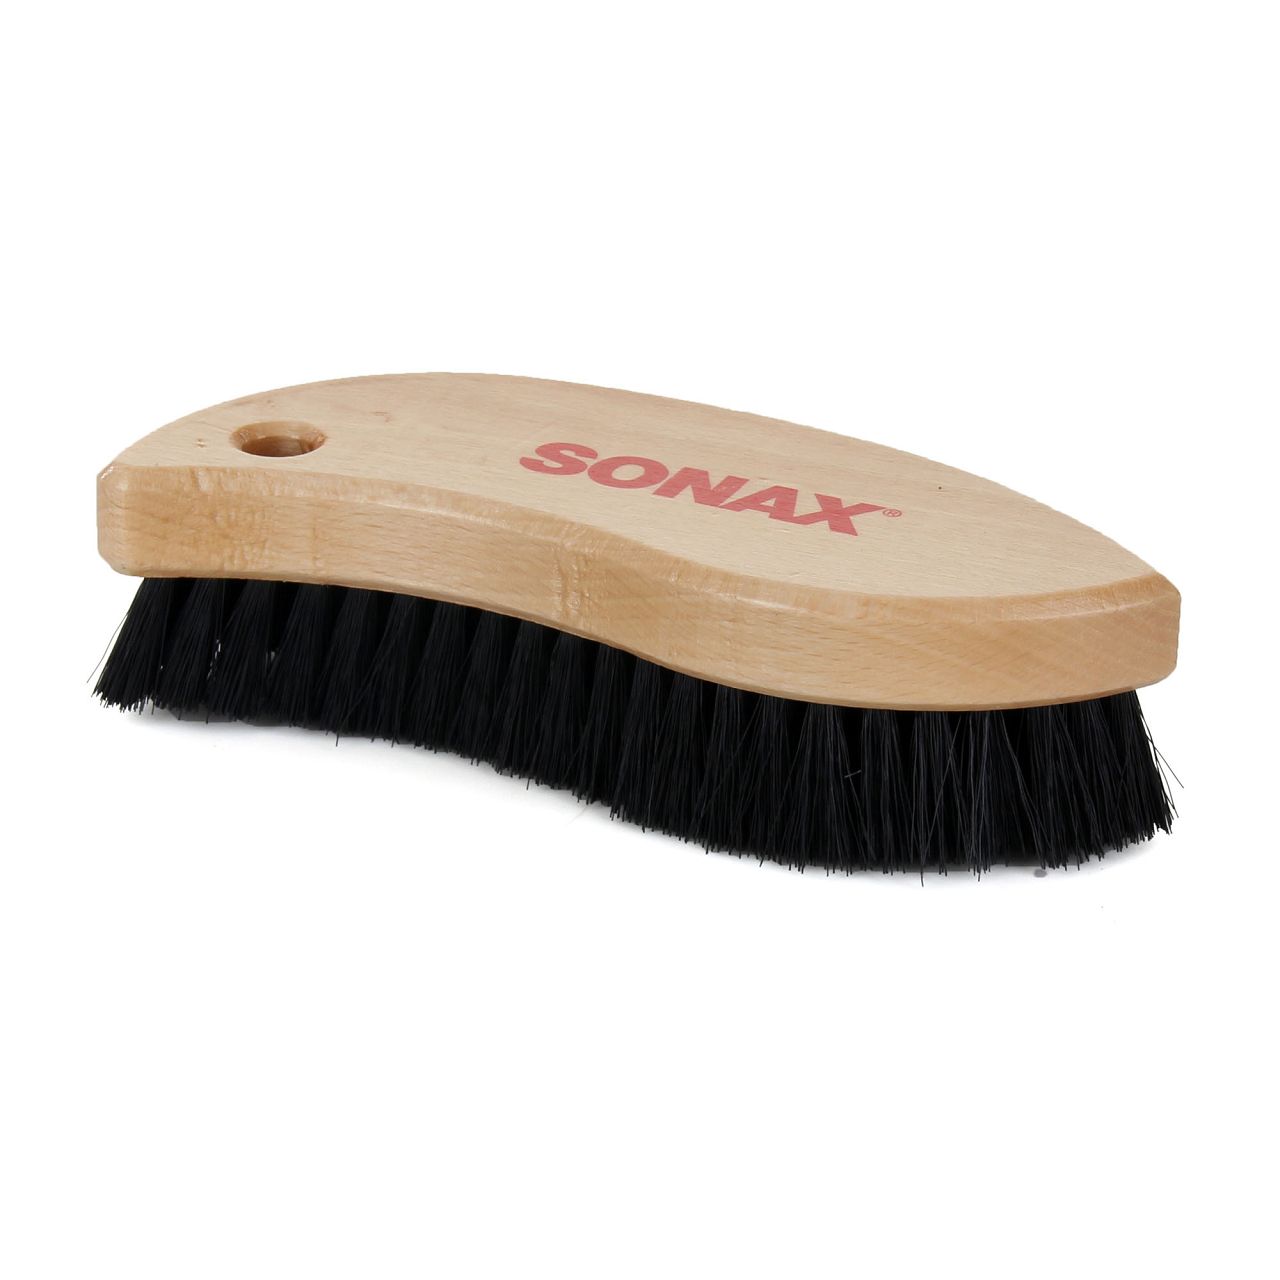 Buy Sonax 206300 Xtreme Upholstery & Alcantara Cleaner 400 ml 1x